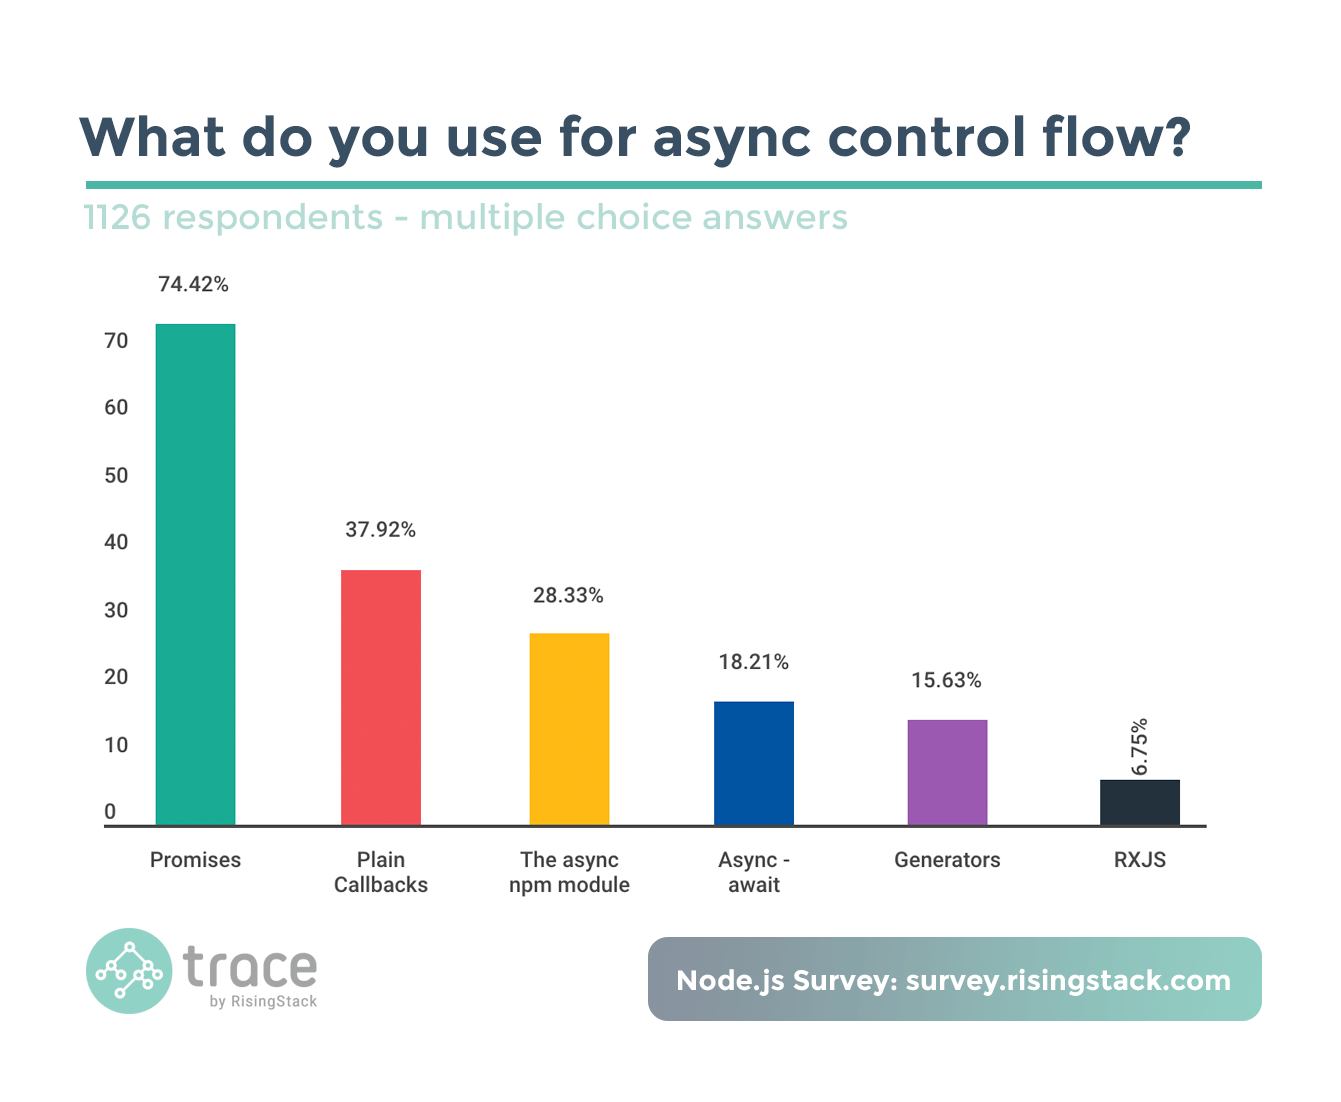 Node.js Survey - What do you use for async control flow? Promises wins.